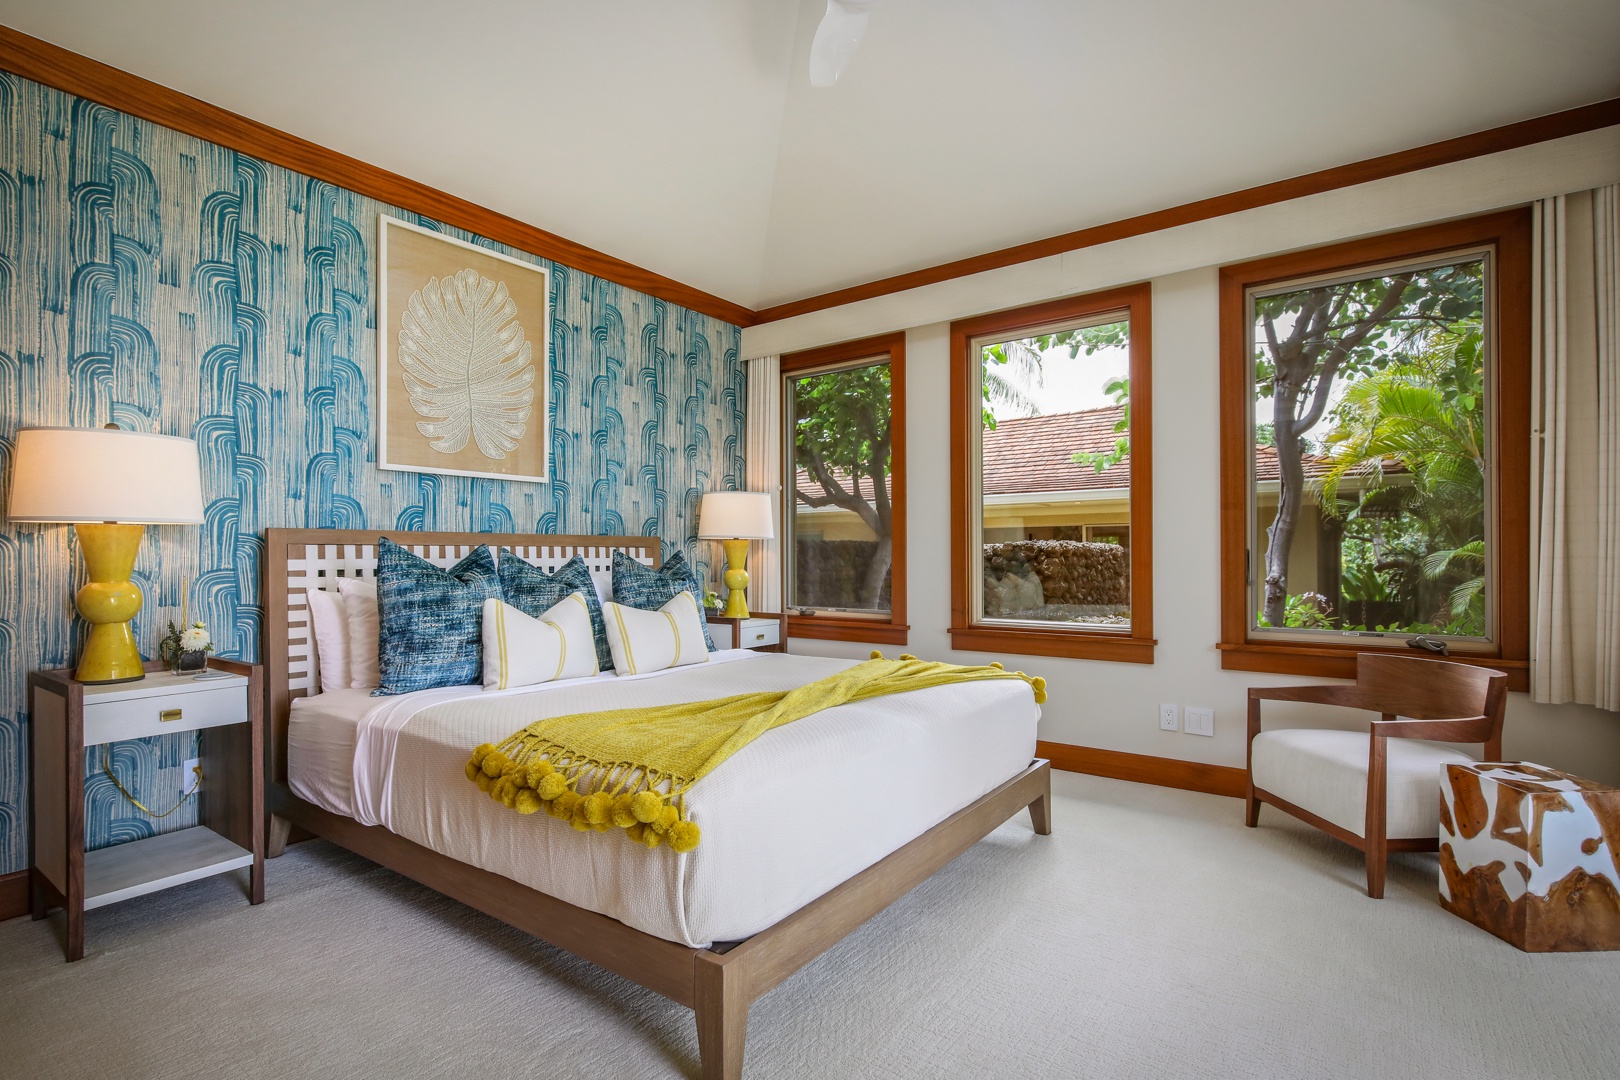 Kailua Kona Vacation Rentals, 4BD Hainoa Estate (122) at Four Seasons Resort at Hualalai - Guest Room 2 with king bed, ocean views, Smart flat screen television and en suite bath.